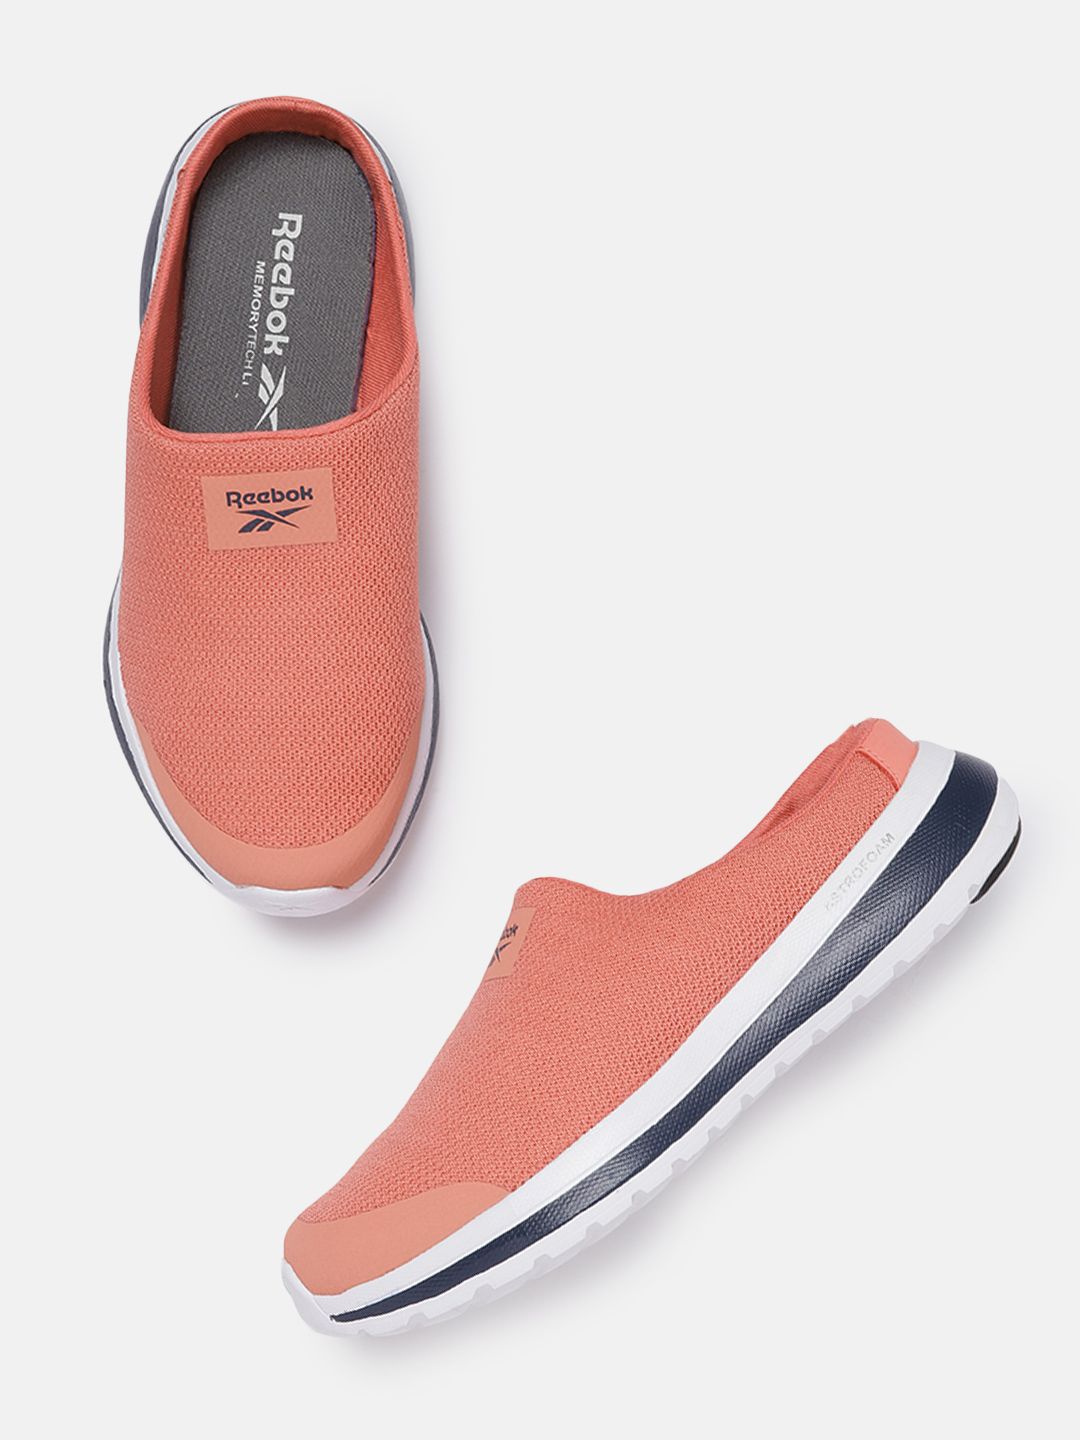 Reebok Women Peach-Coloured Woven Design Comfort Wonder Walking Sneaker Mules Price in India